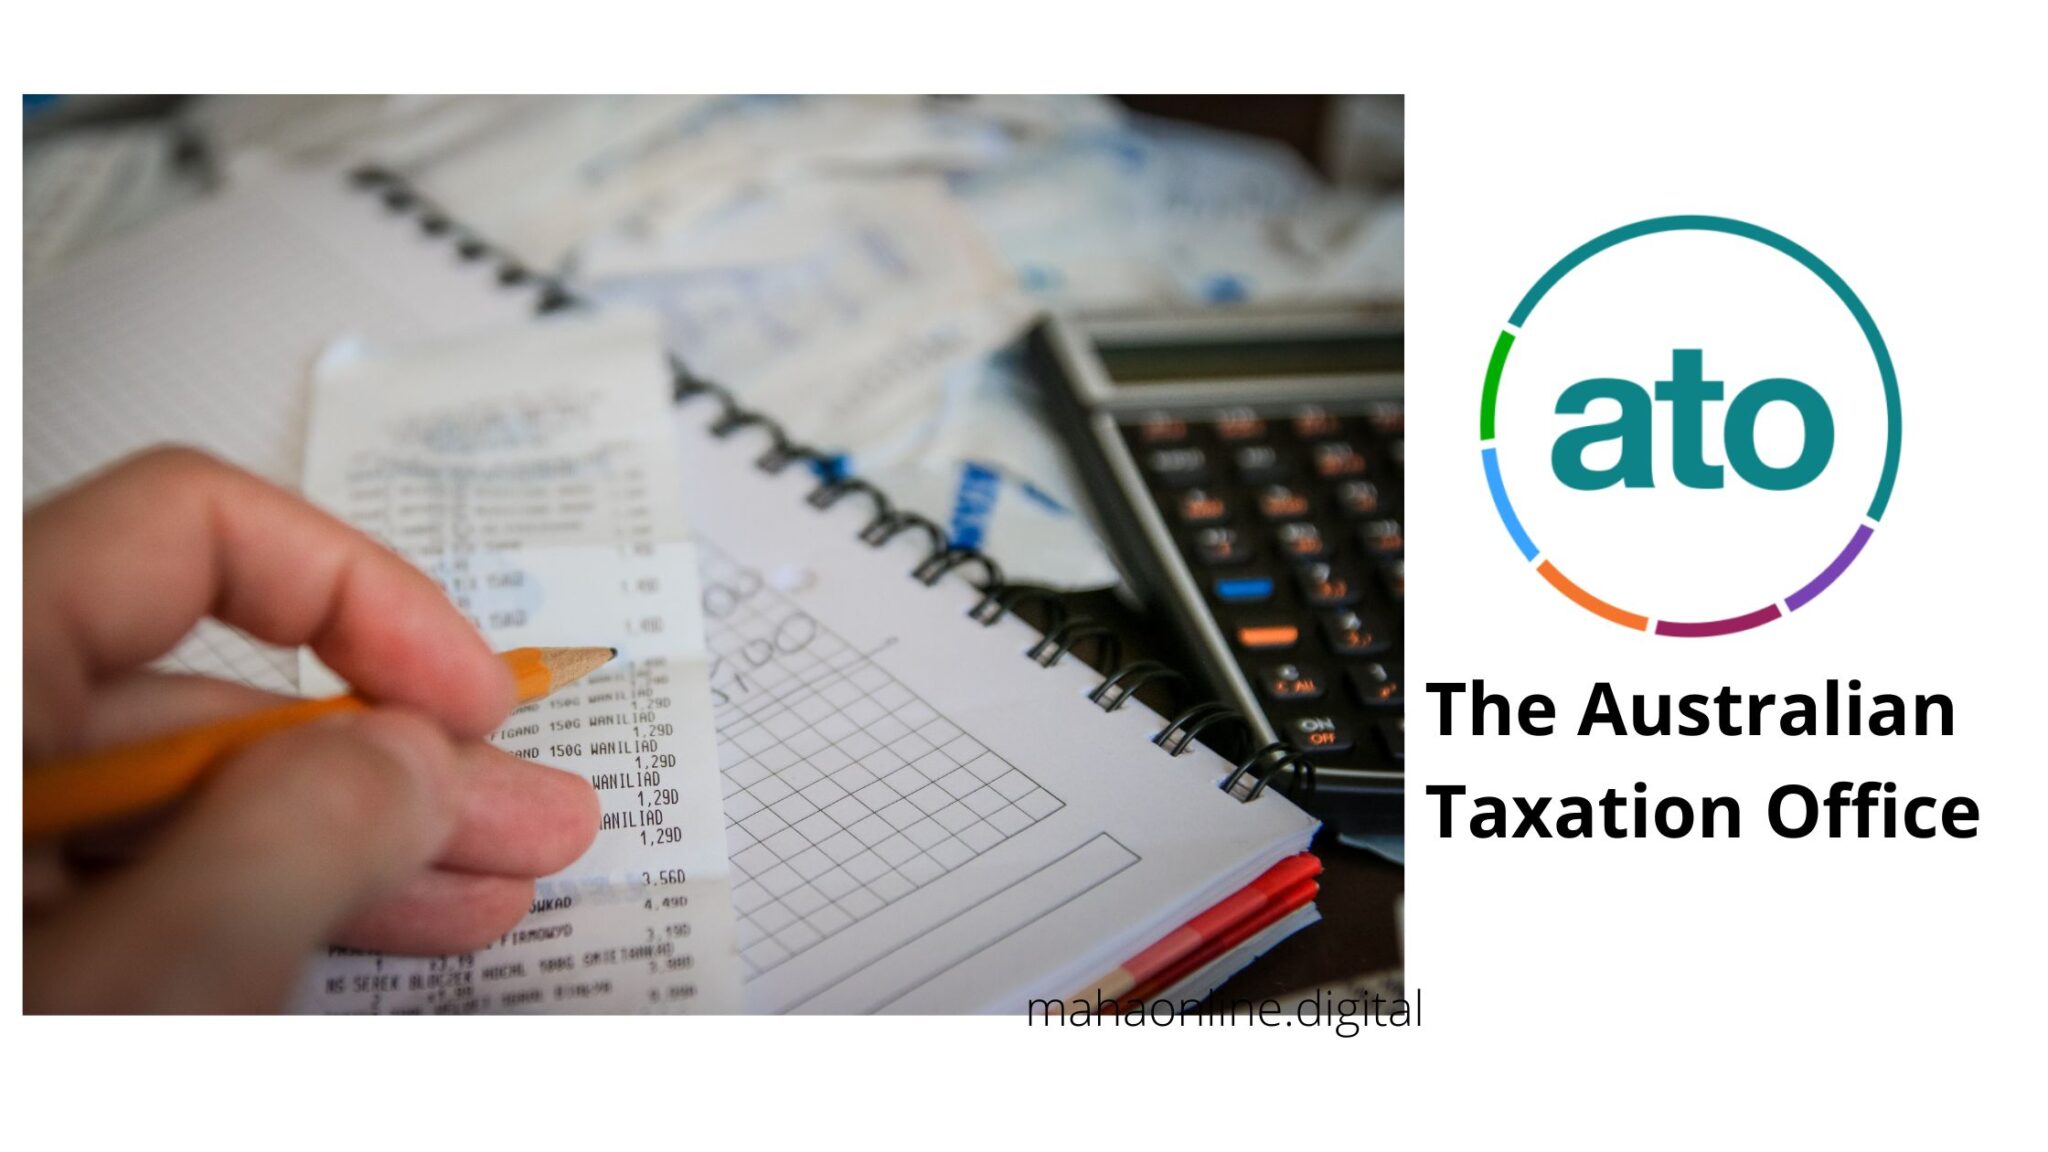 attention-tax-refund-2022-australia-ato-times-md